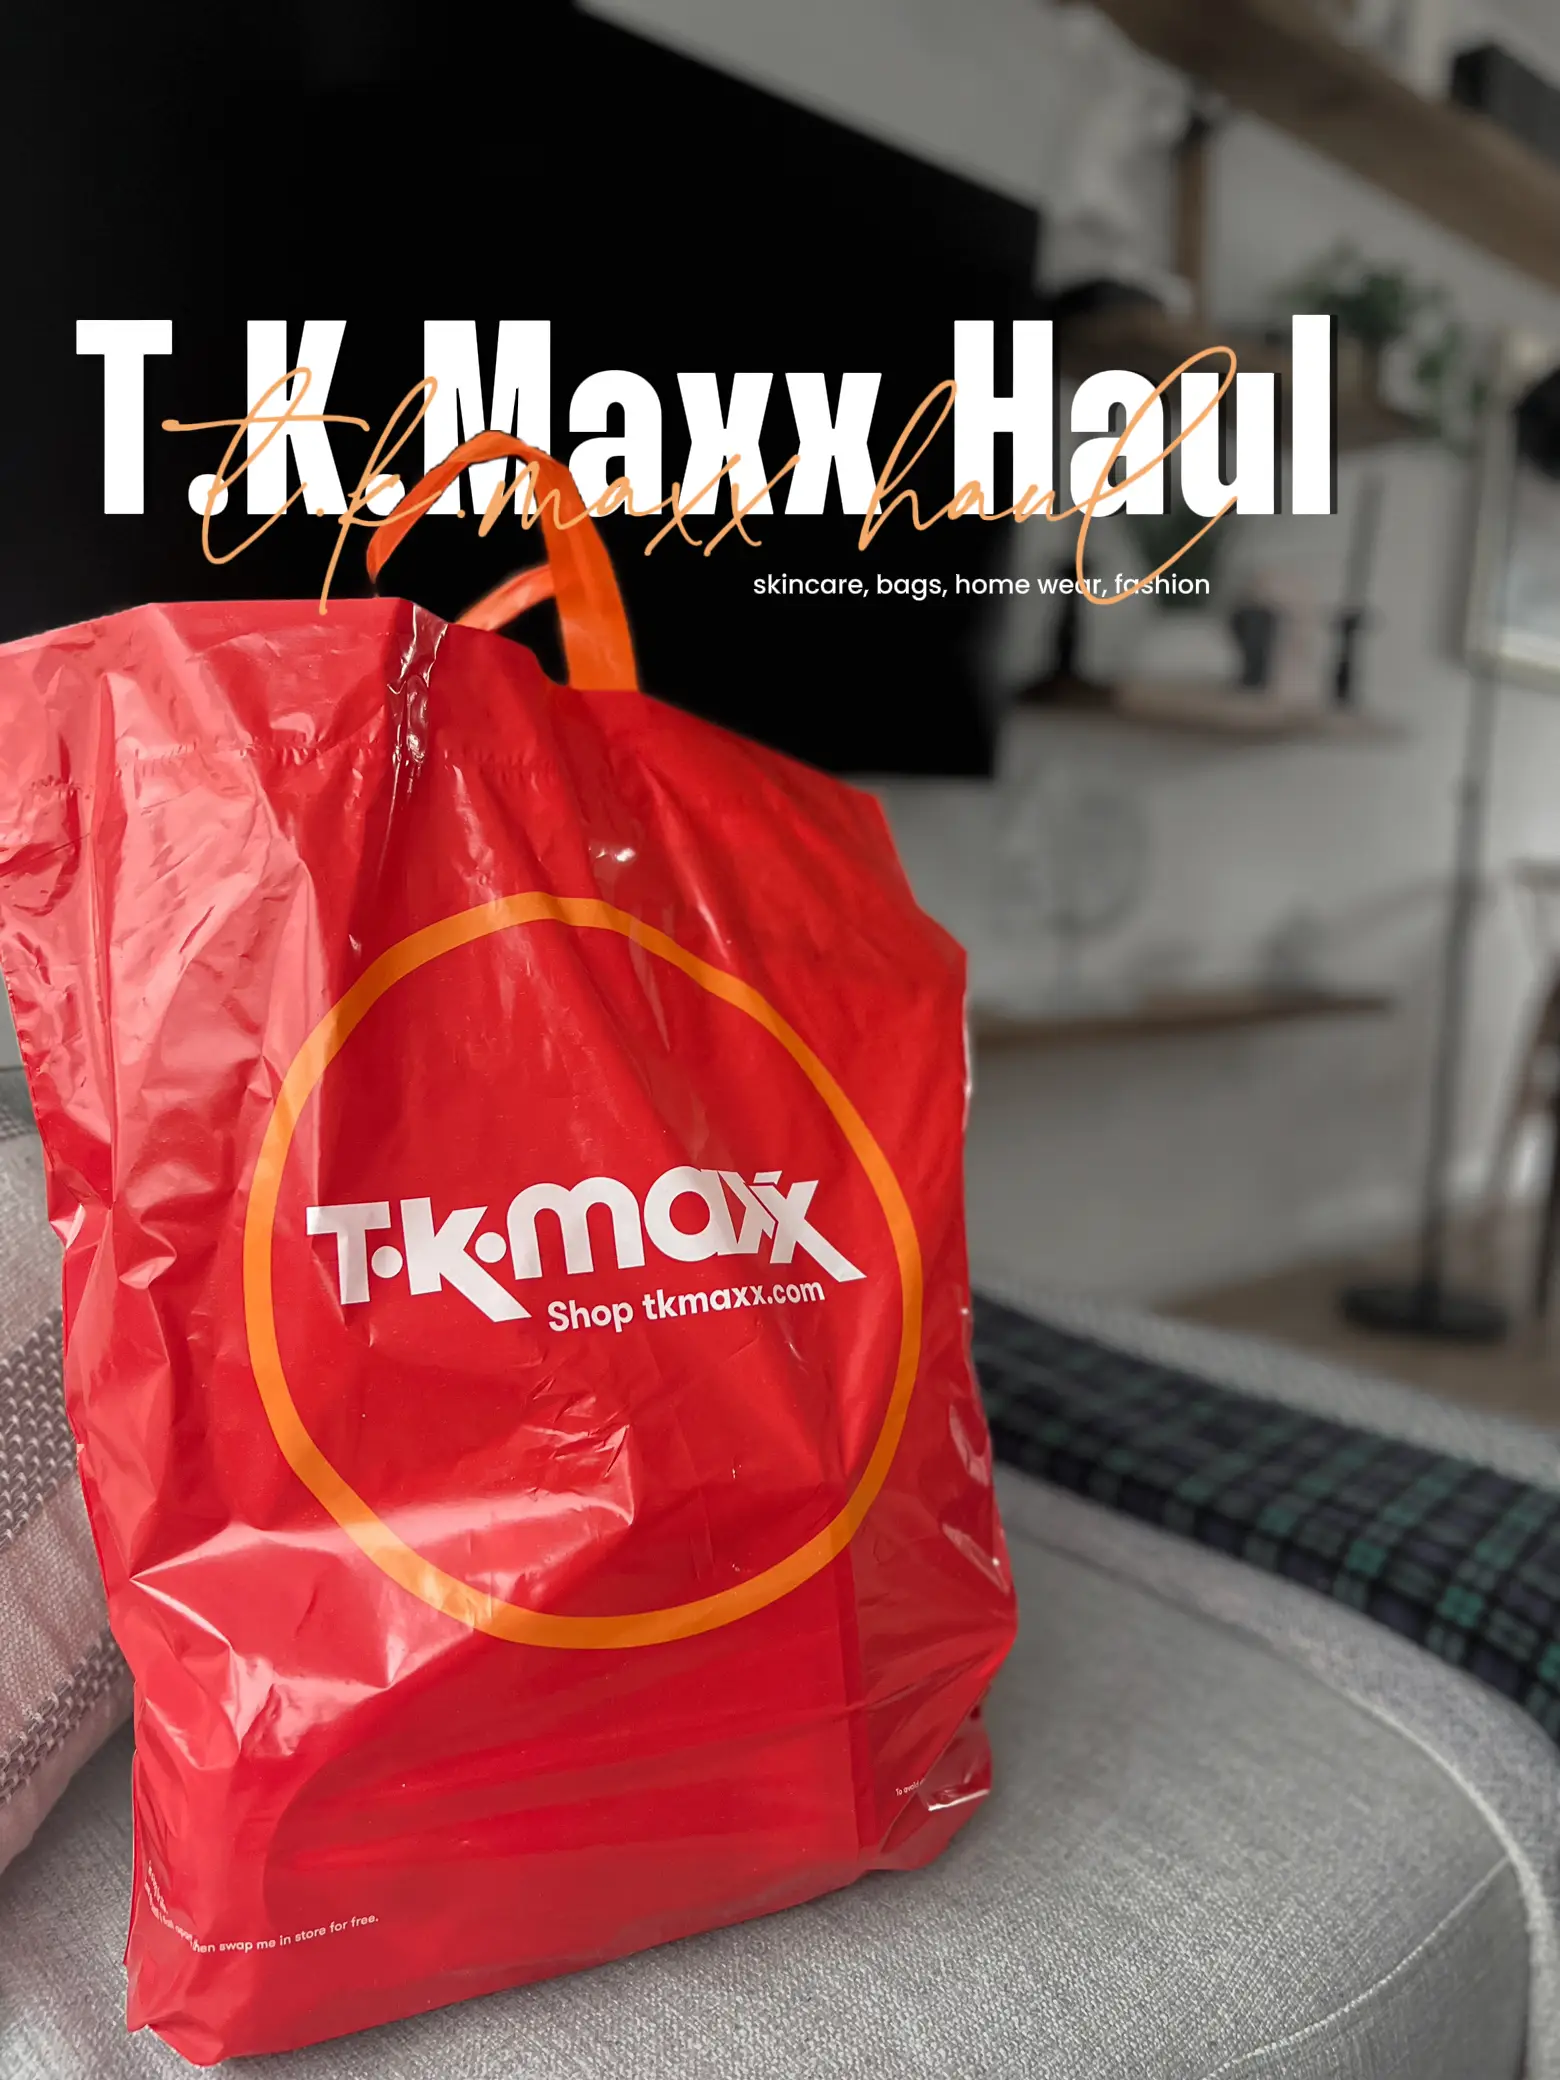 tk maxx find! : r/handbags